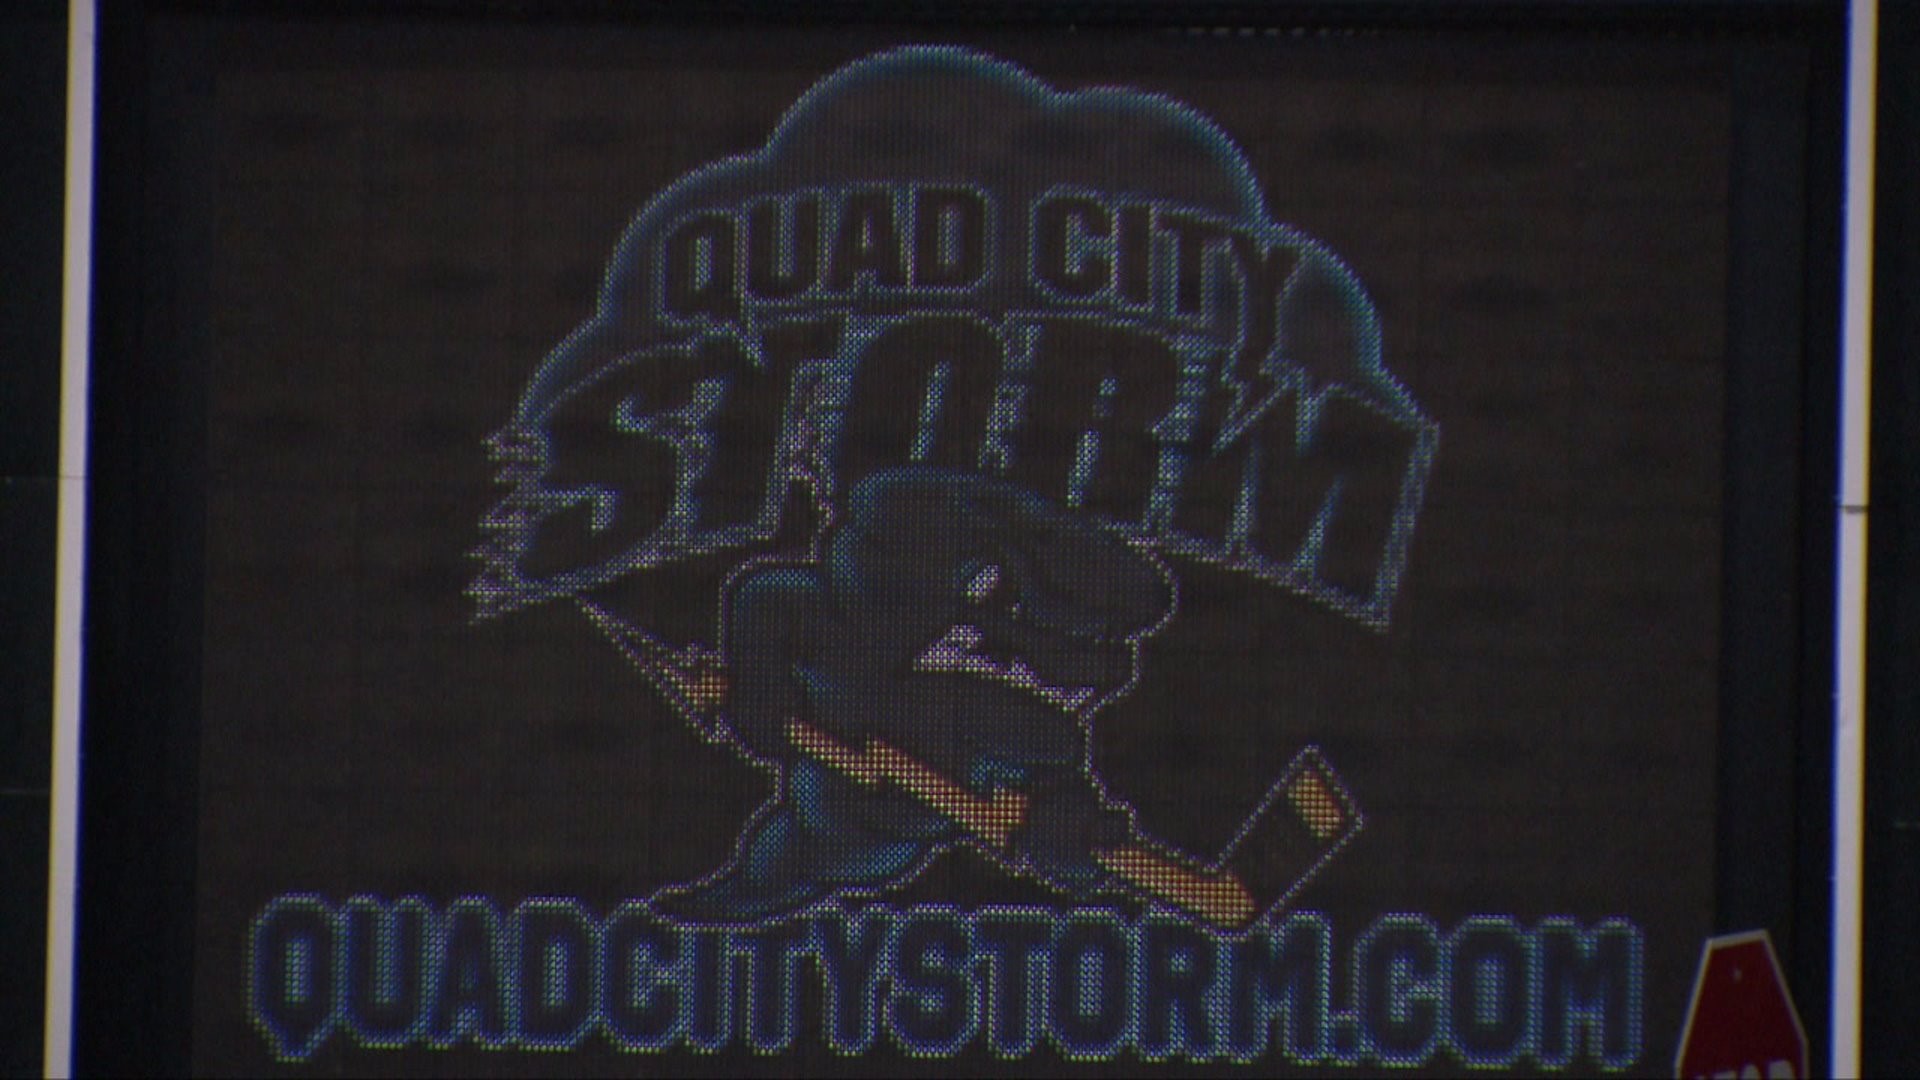 Quad City Storm needs more sponsors